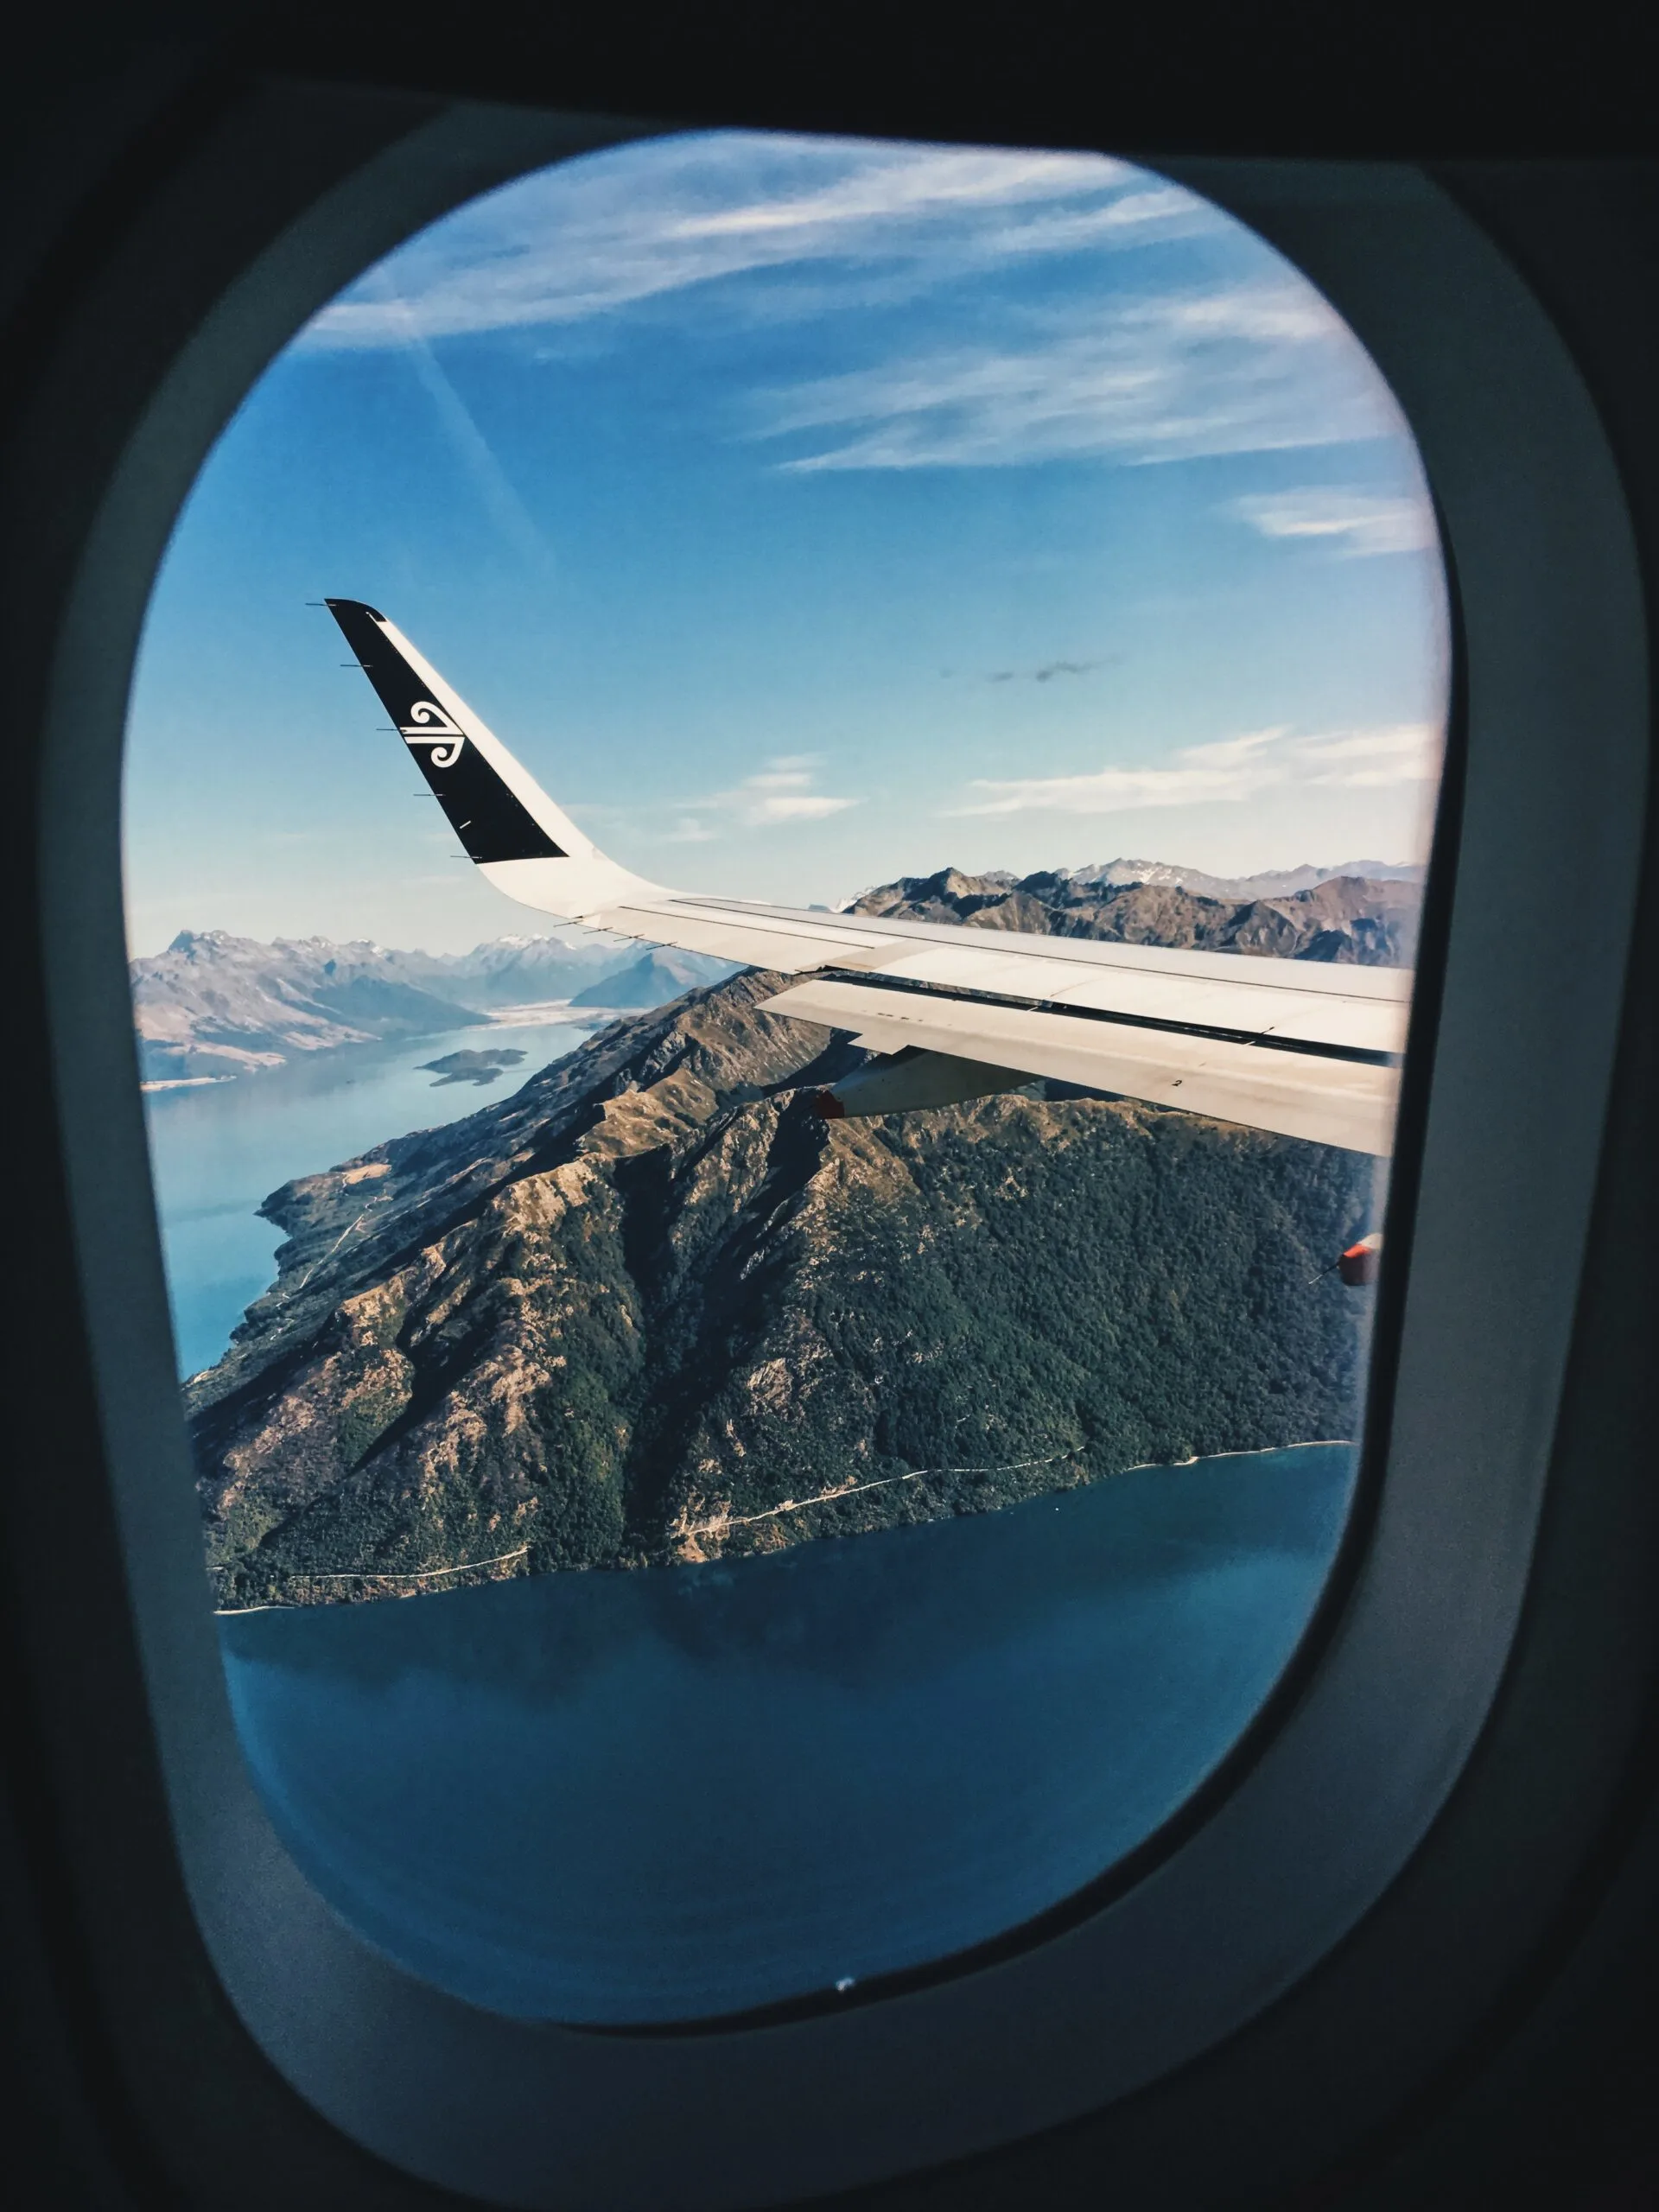 White Airplane Window showing mountains